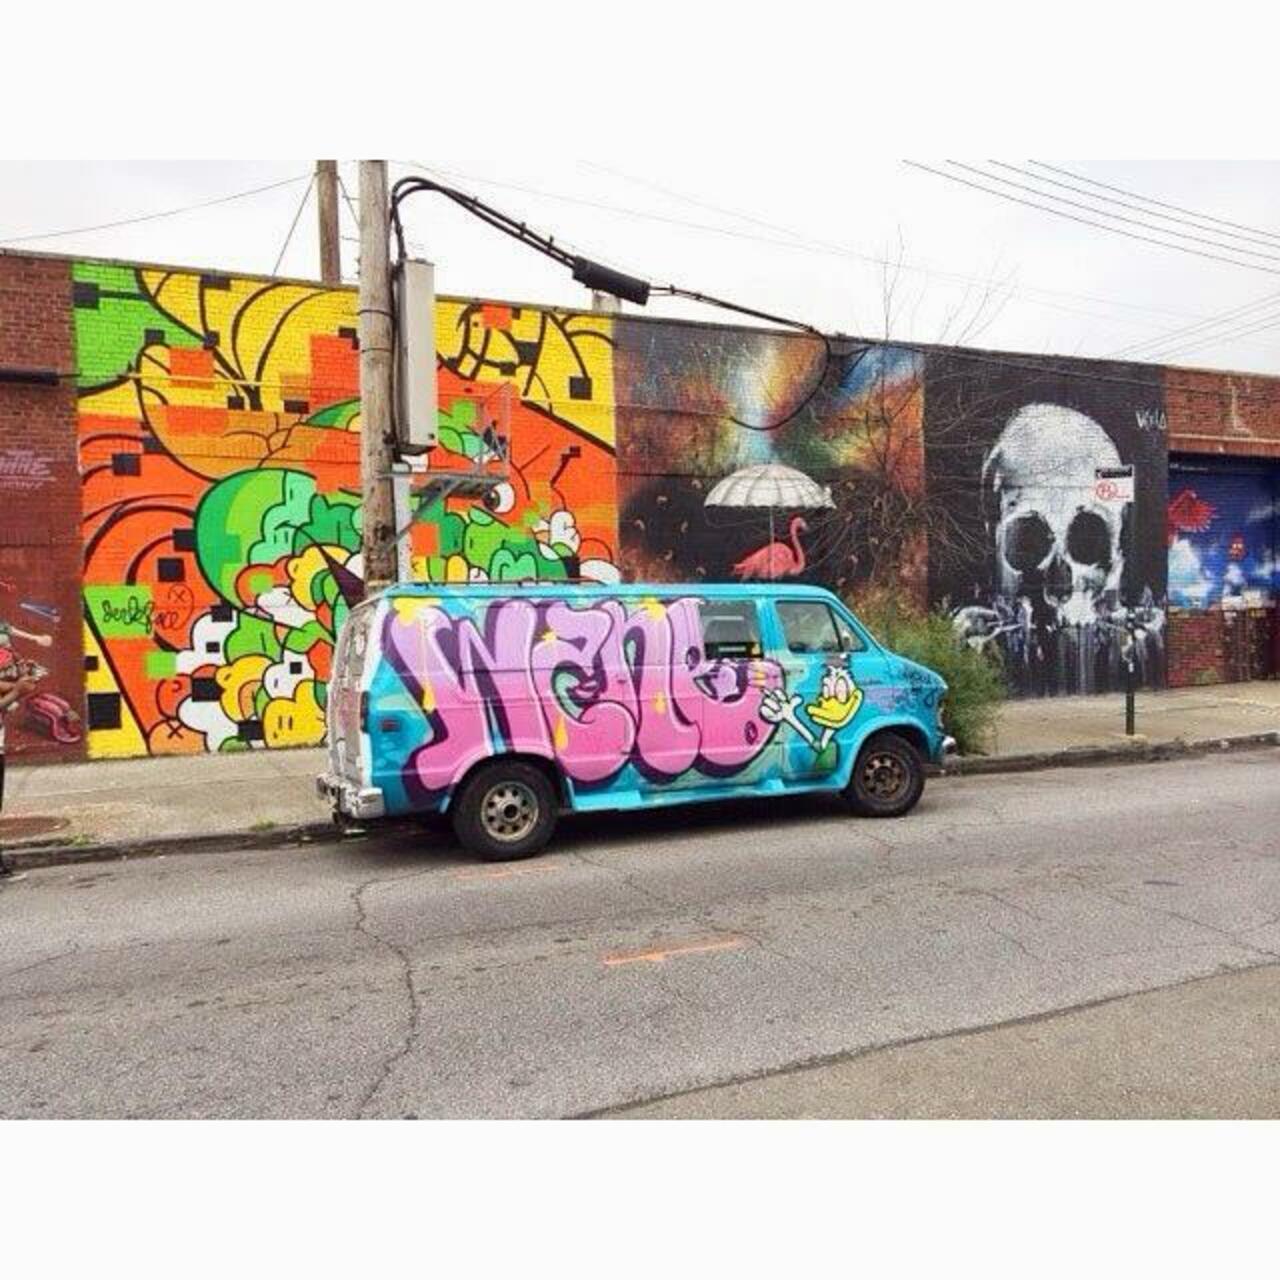 I saw this van in #brooklyn . Does anyone know of the #artist ? #streetart #graffiti http://t.co/lmTwQXjThQ